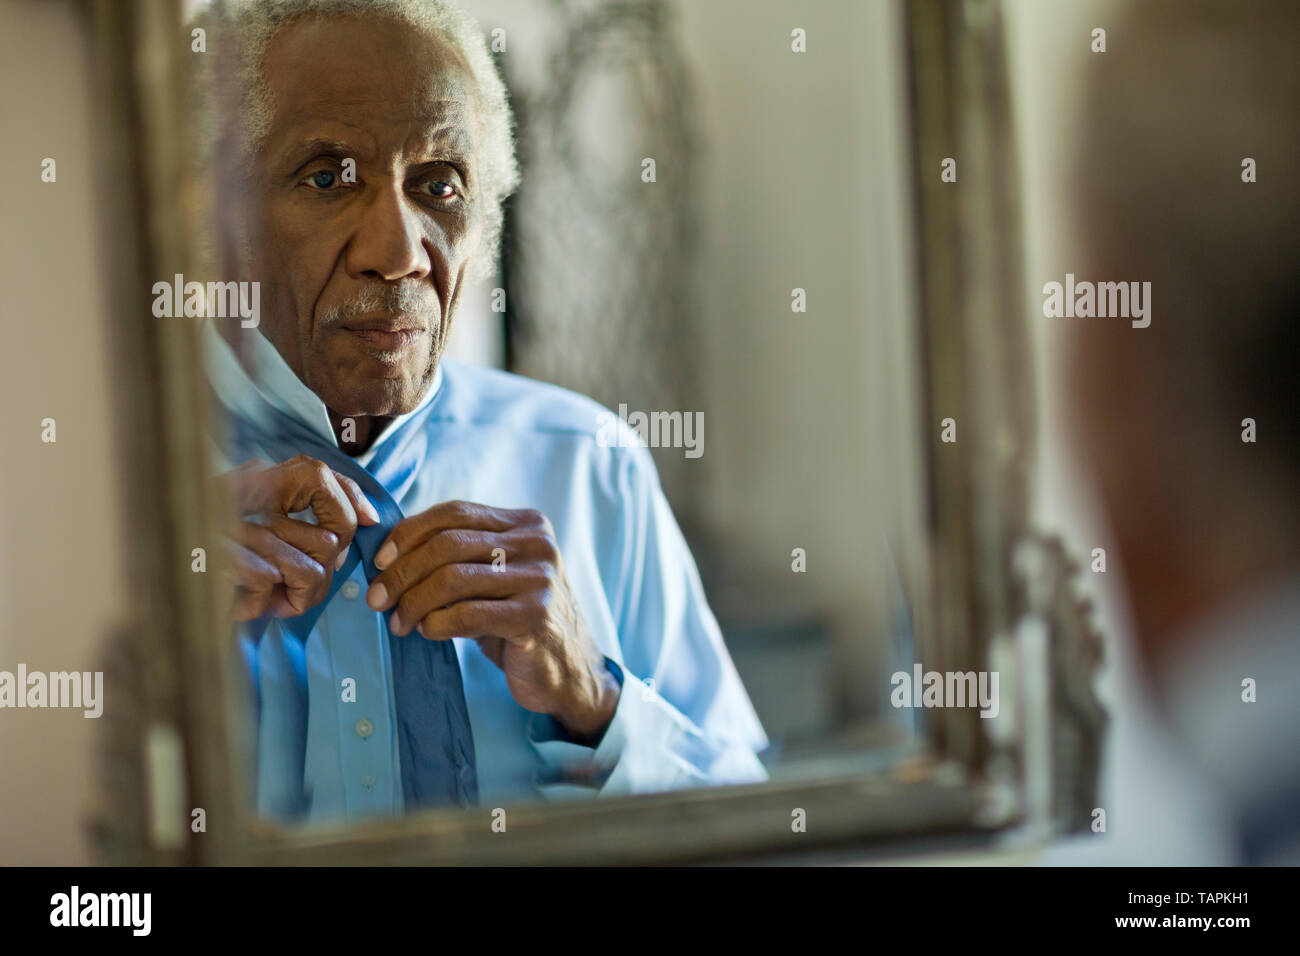 Senior man fixing his tie in the mirror. Stock Photo